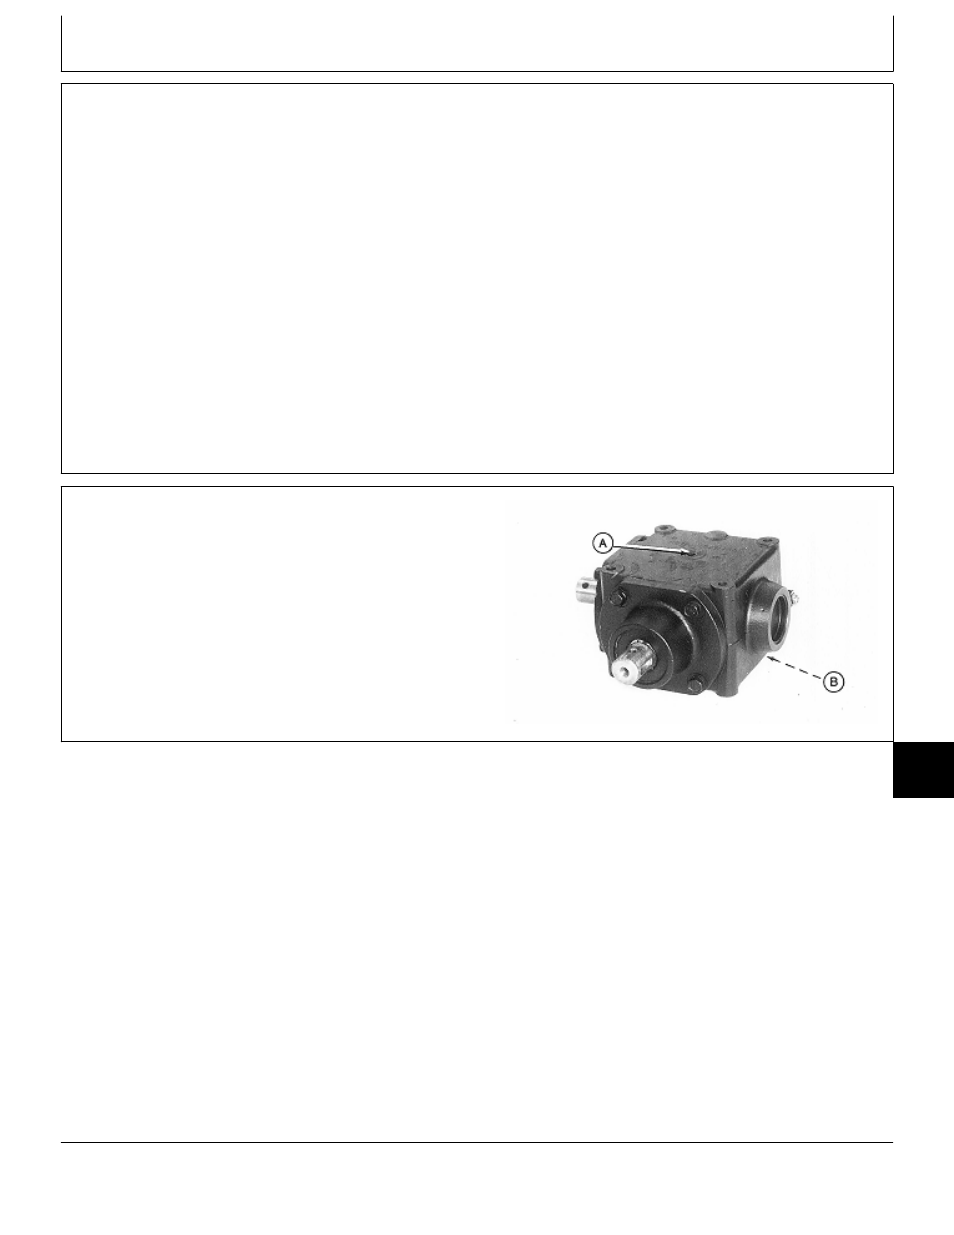 Mower gear case repair, Group 15, Other material | John Deere 318 User Manual | Page 229 / 440